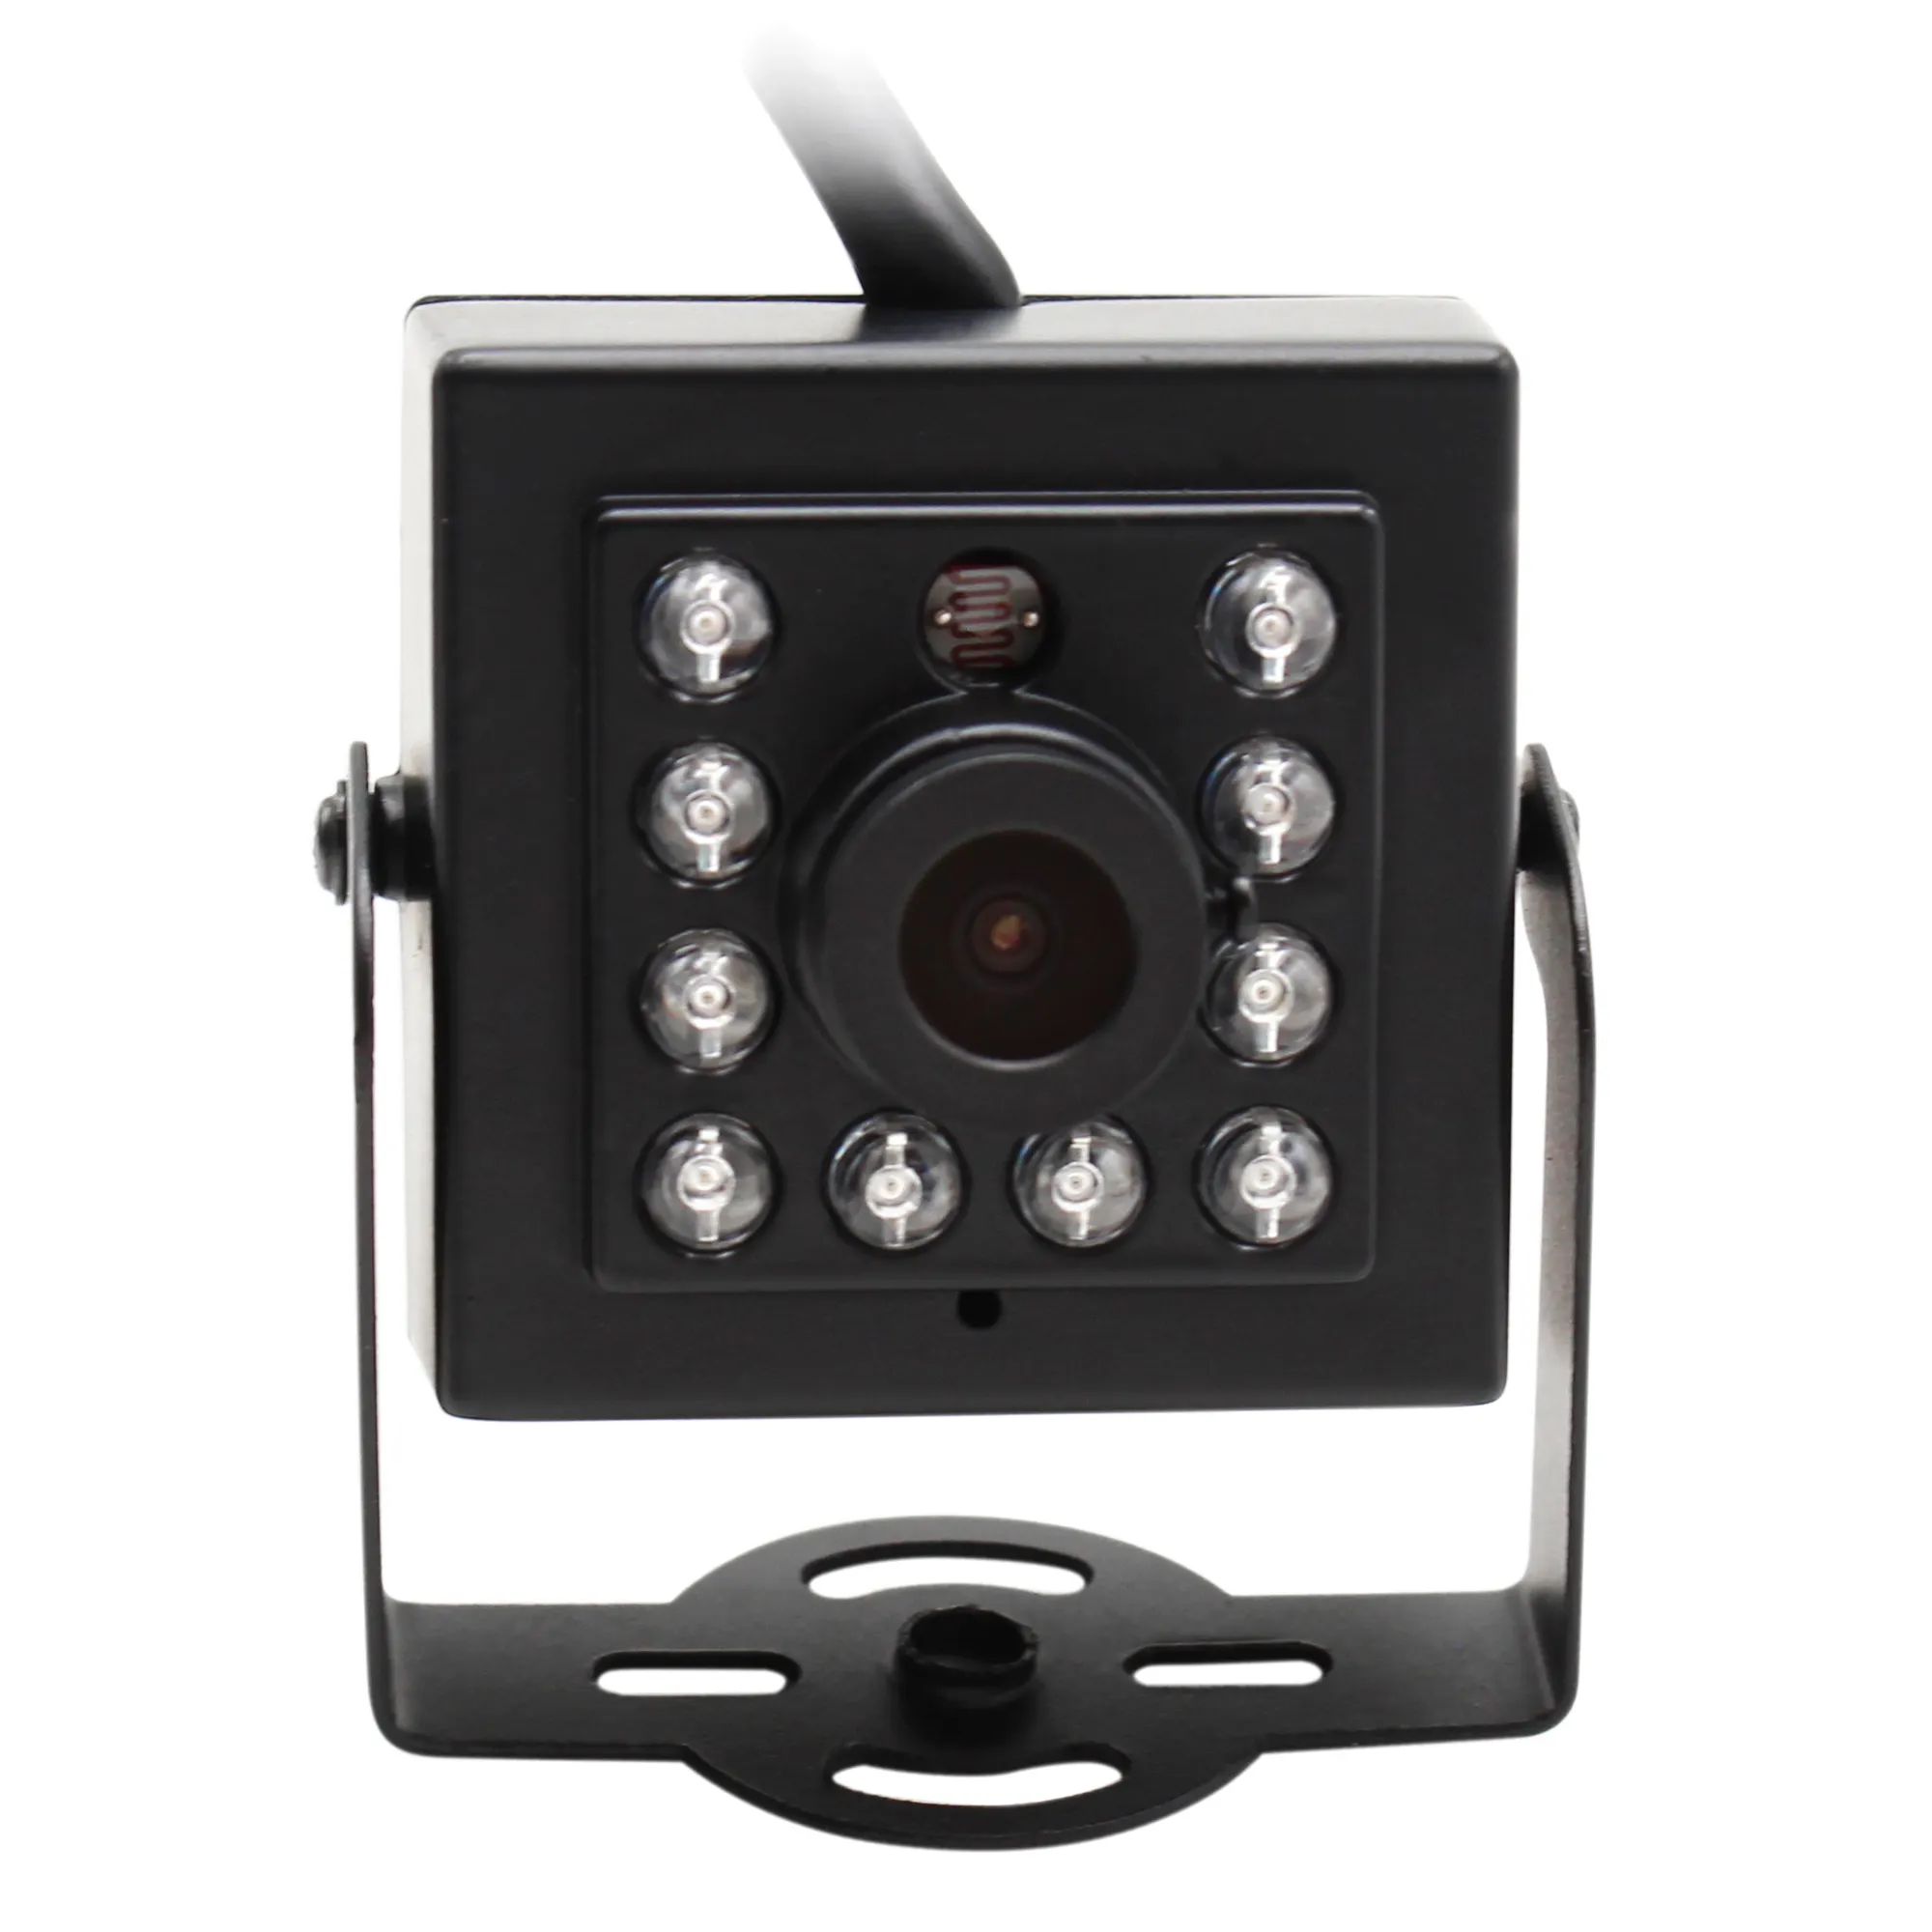 ELP Full HD Infrared Webcam H.264 30fps 1920*1080 Video Surveillance CCTV IR USB Camera For Computer PC Desktop Laptop